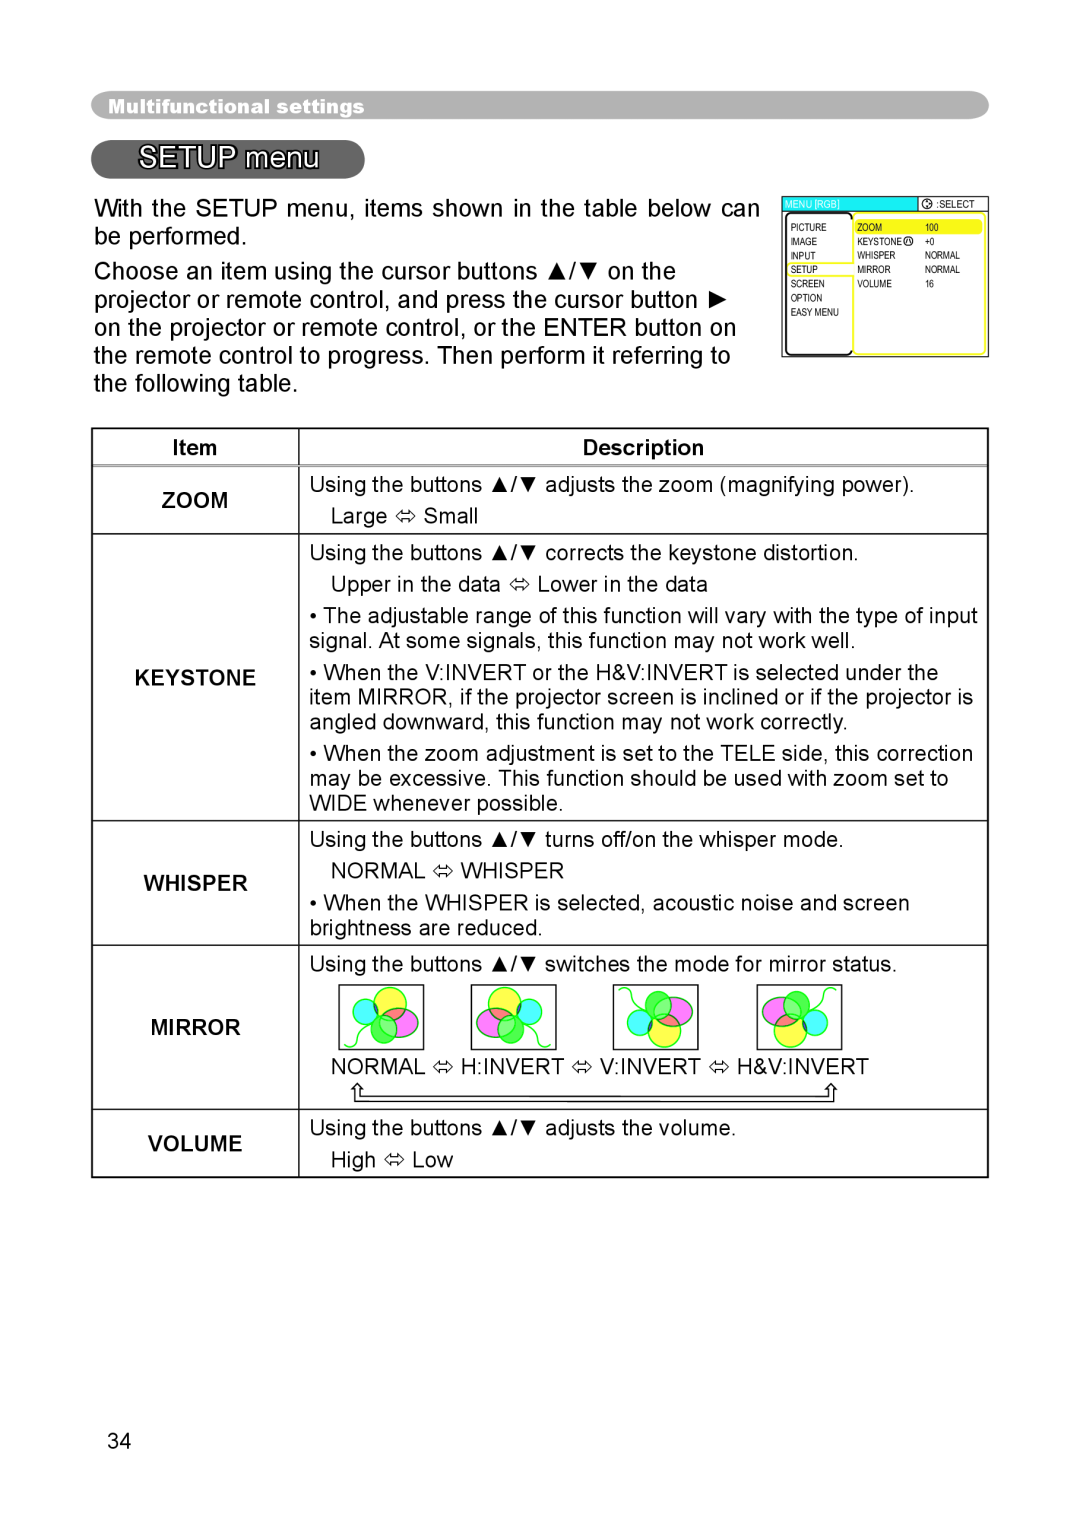 3M S15 manual SETUP menu, Zoom Keystone Whisper Mirror Volume, Description 